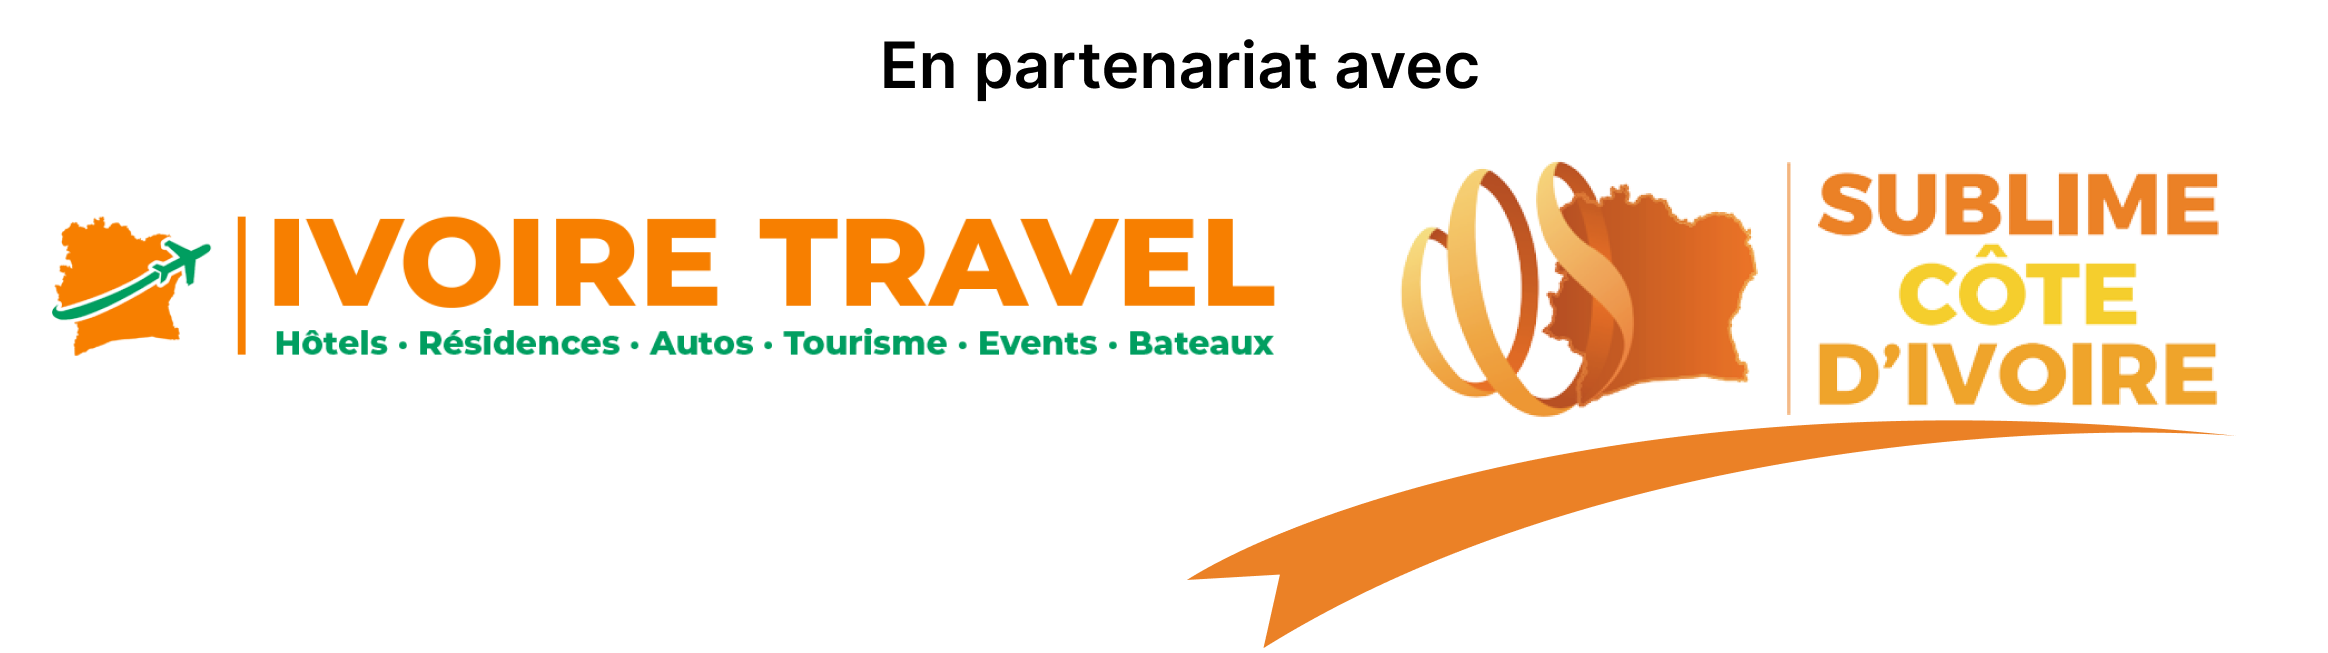 Ivoire Travel